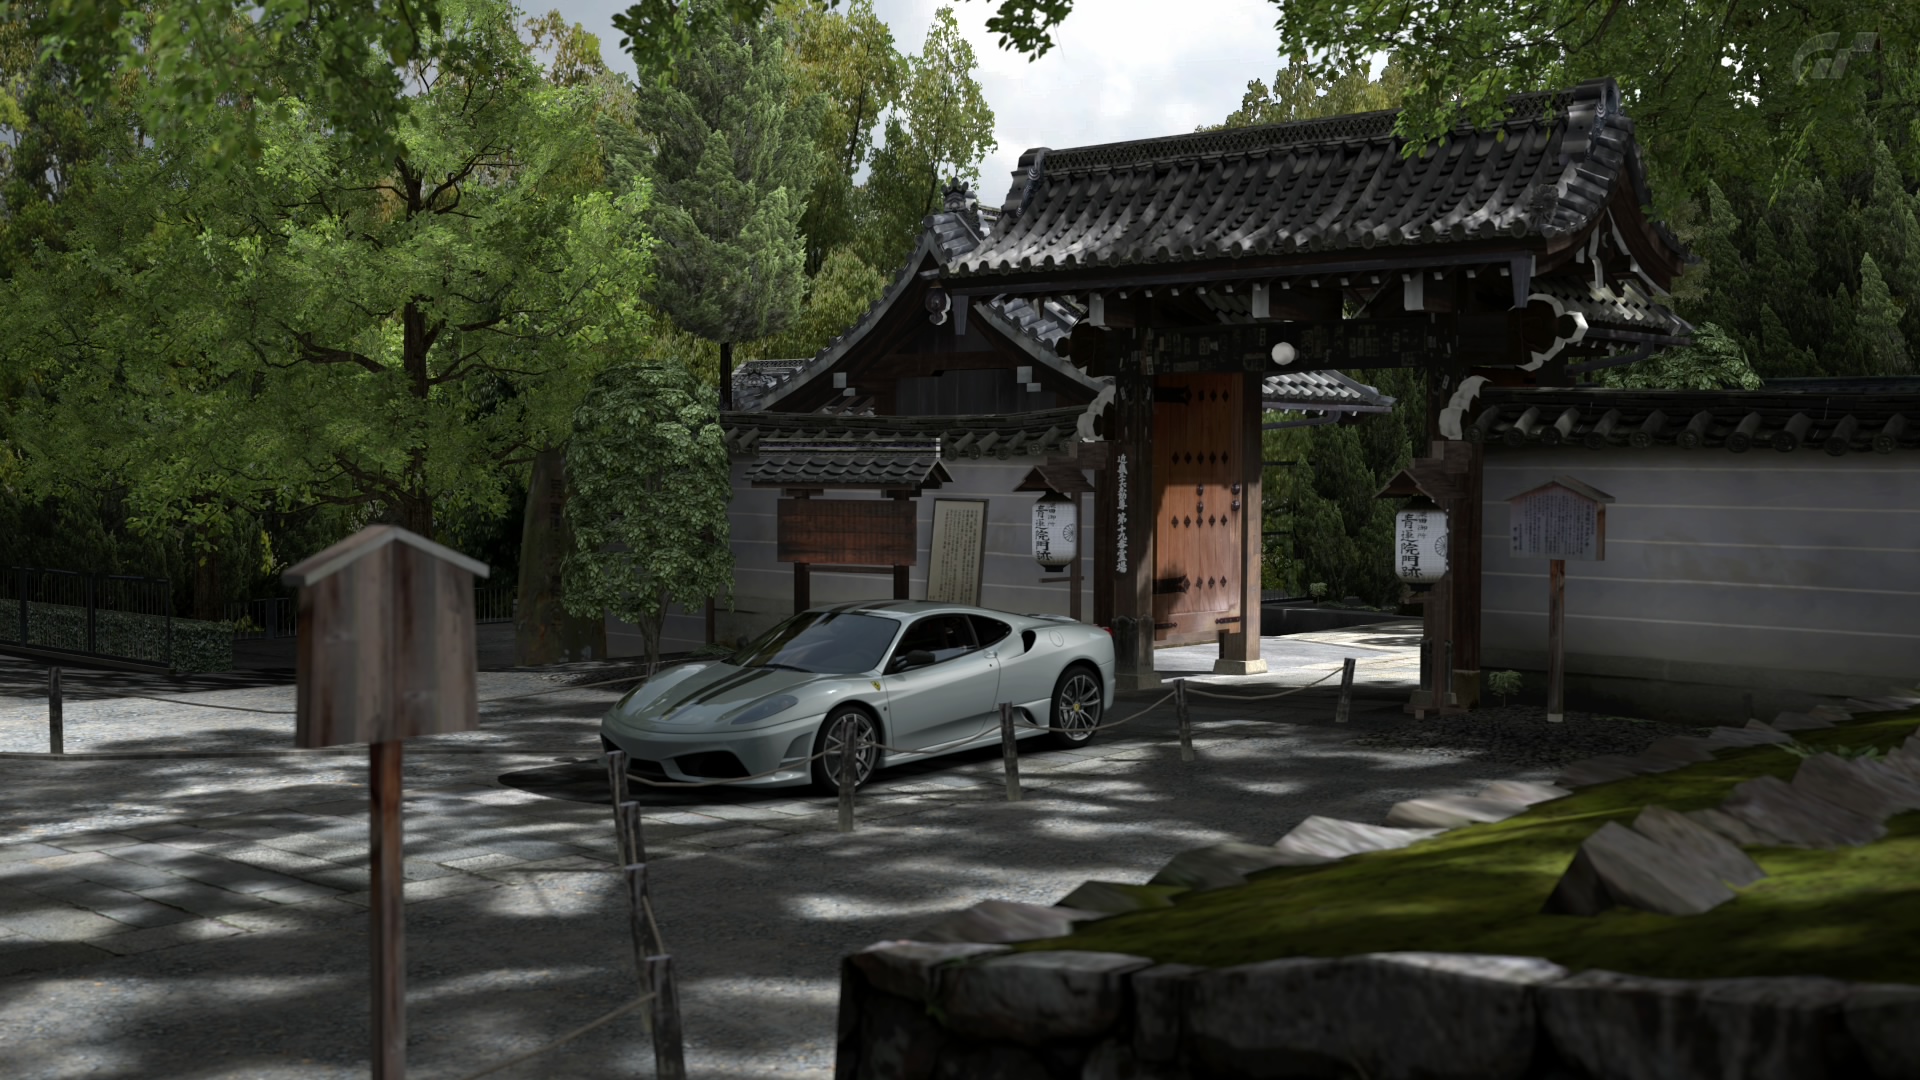 Gran Turismo 5 Prologue demo, free download Oct. 24th